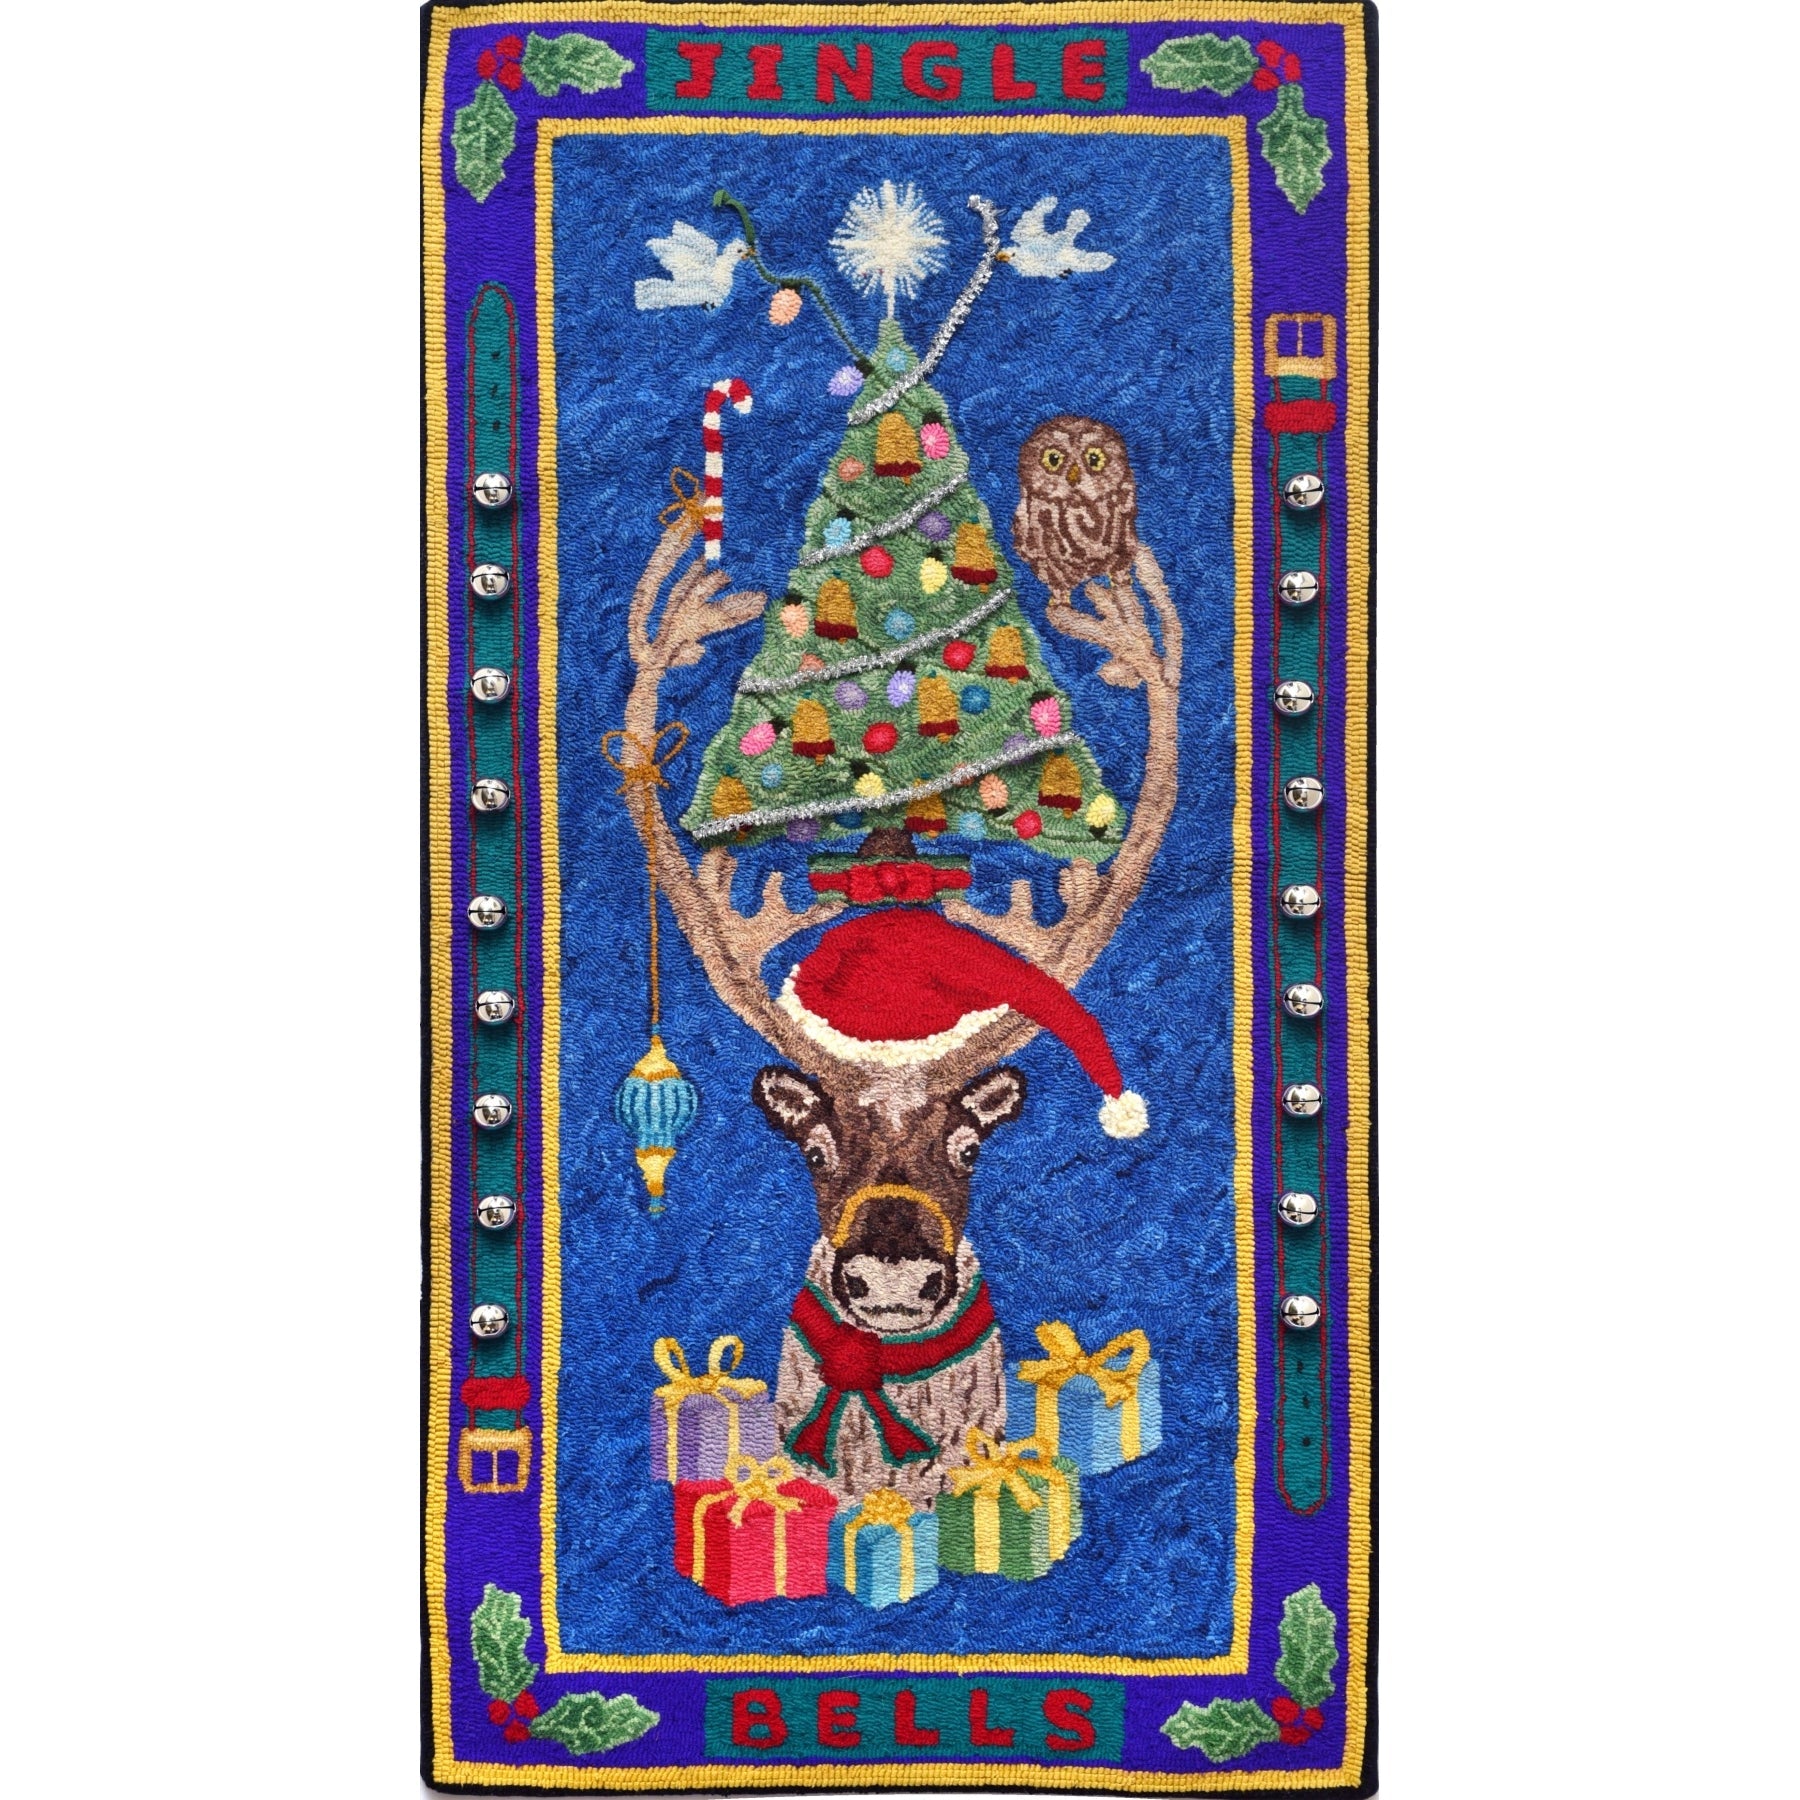 Jingle Bells, rug hooked by John Leonard